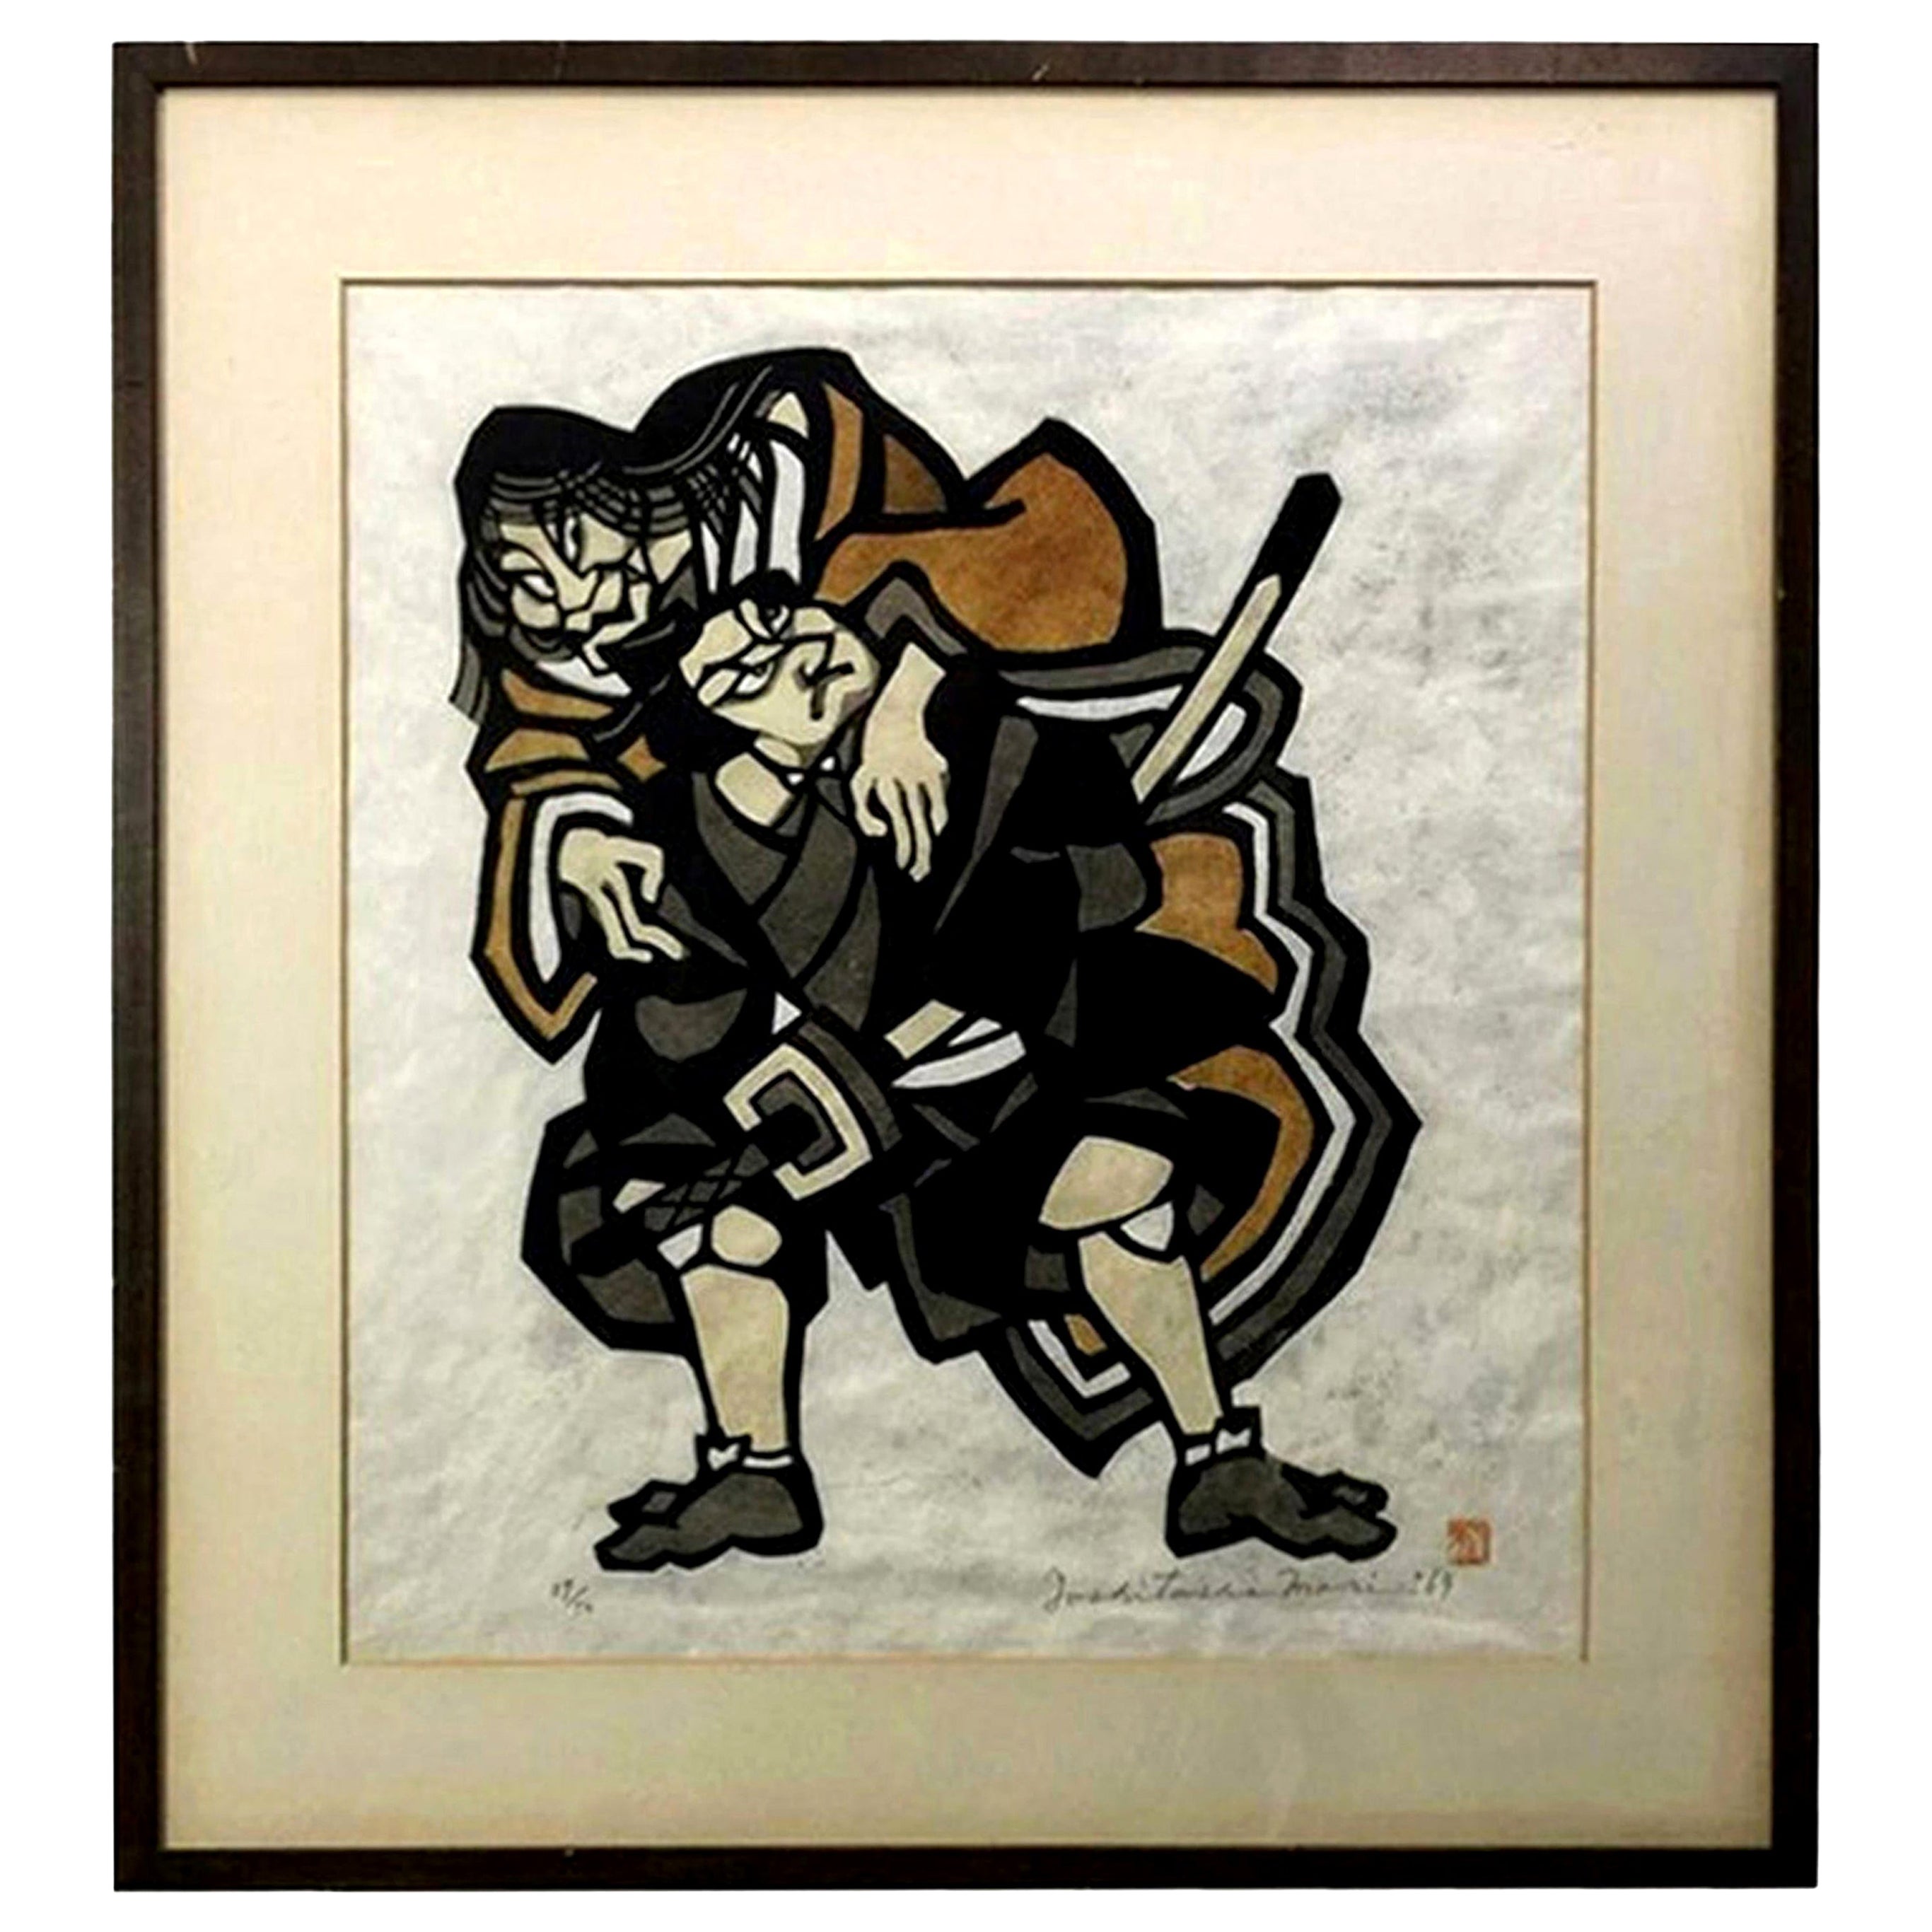 Yoshitoshi Mori Signed Limited Edition Japanese Woodblock Stencil Print, 1969